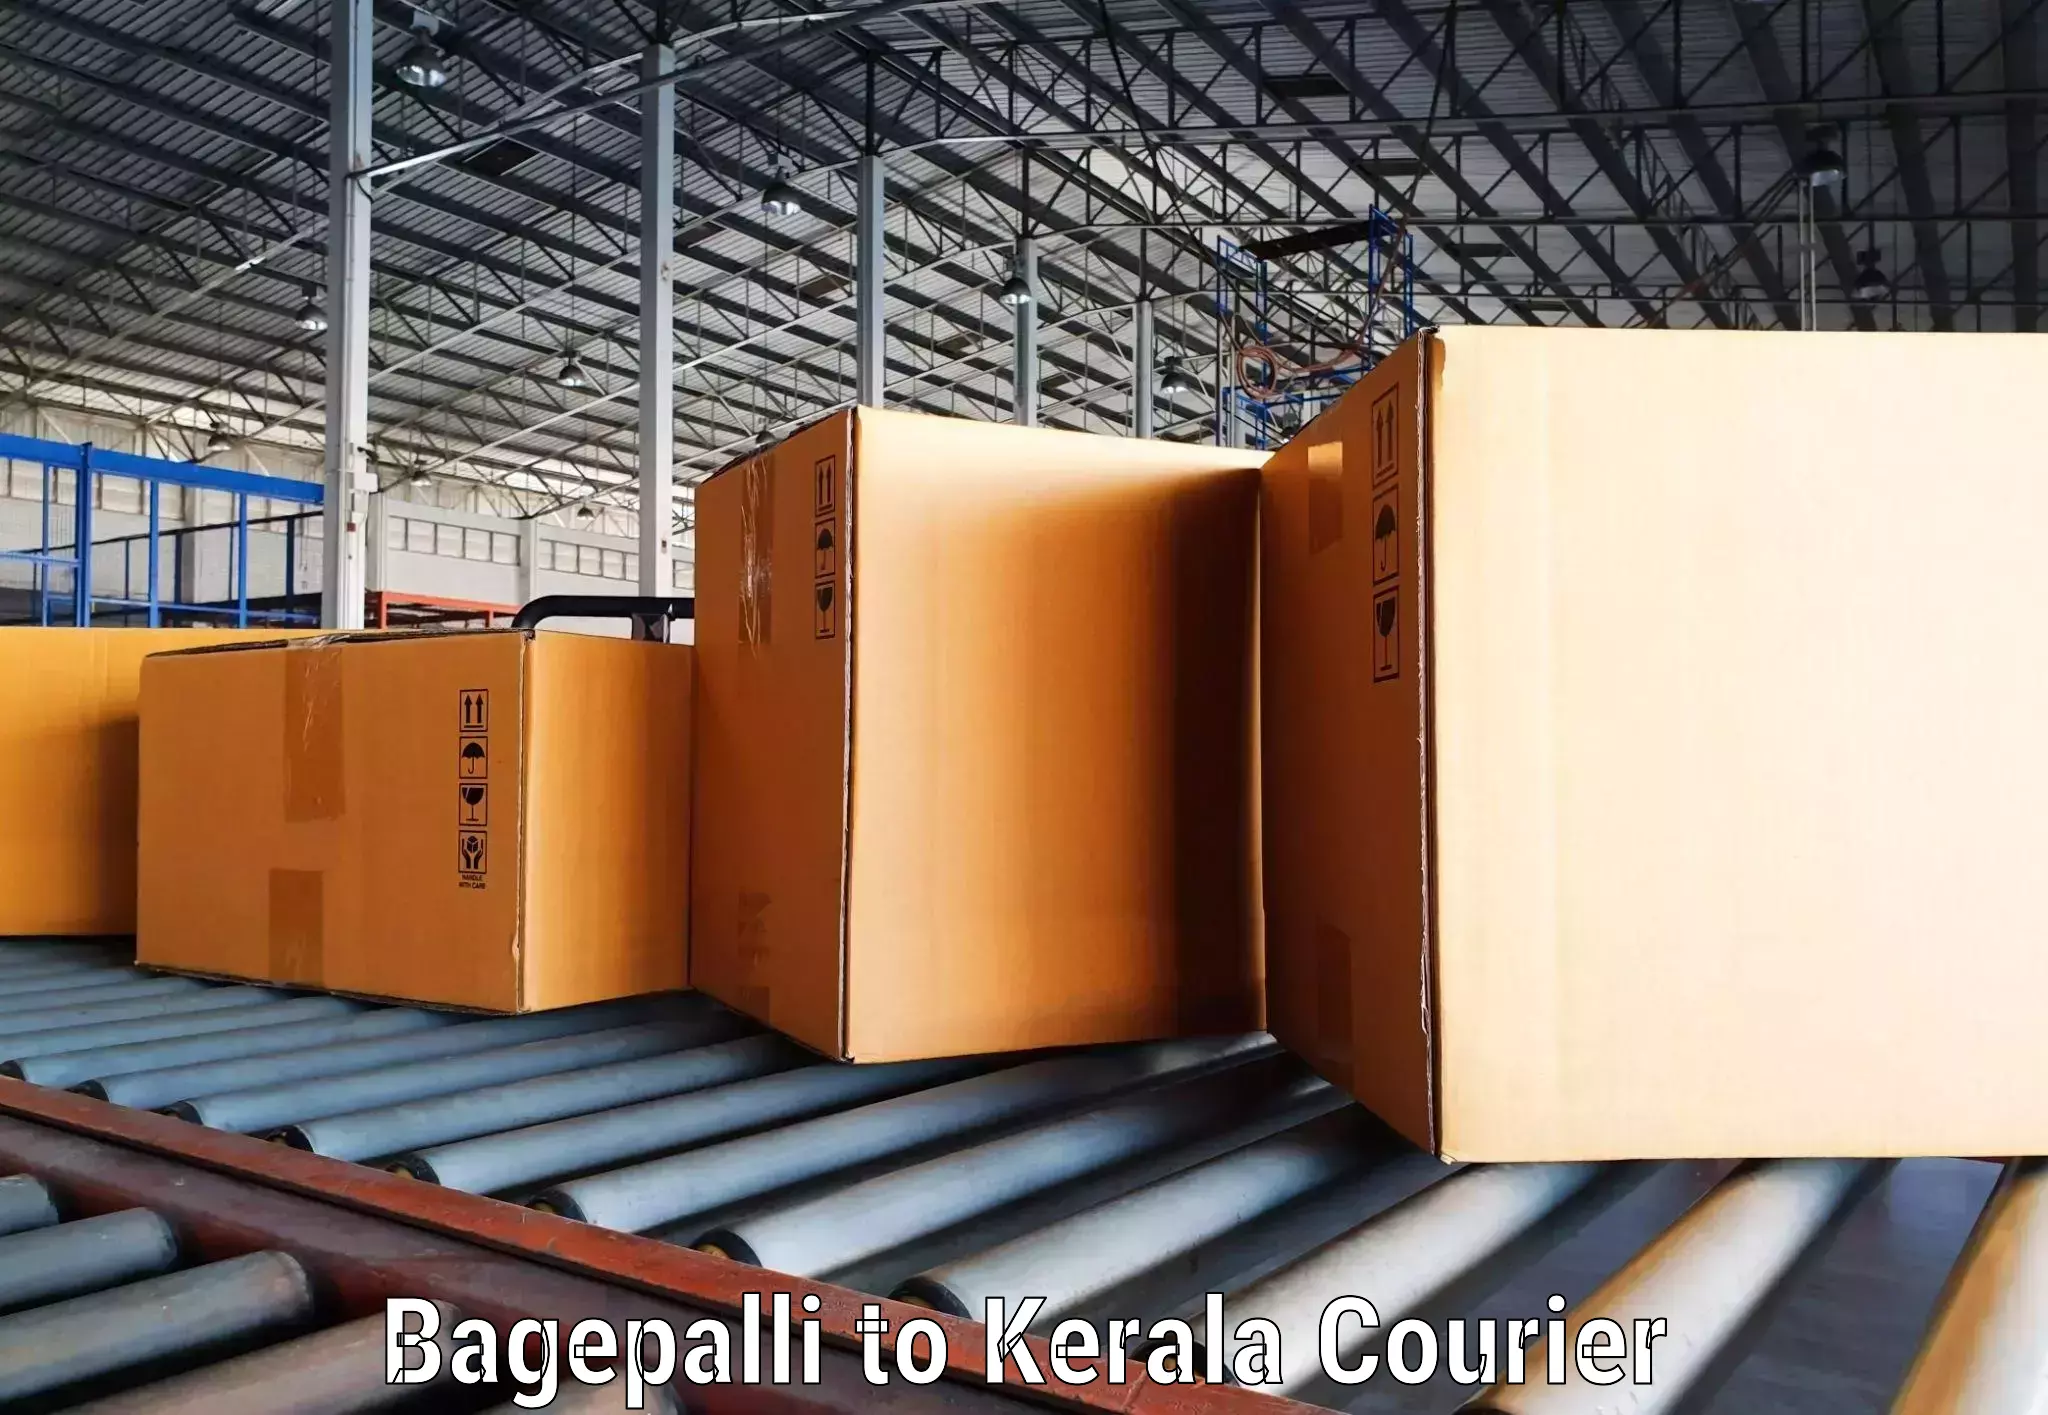 Multi-national courier services Bagepalli to Thiruvananthapuram